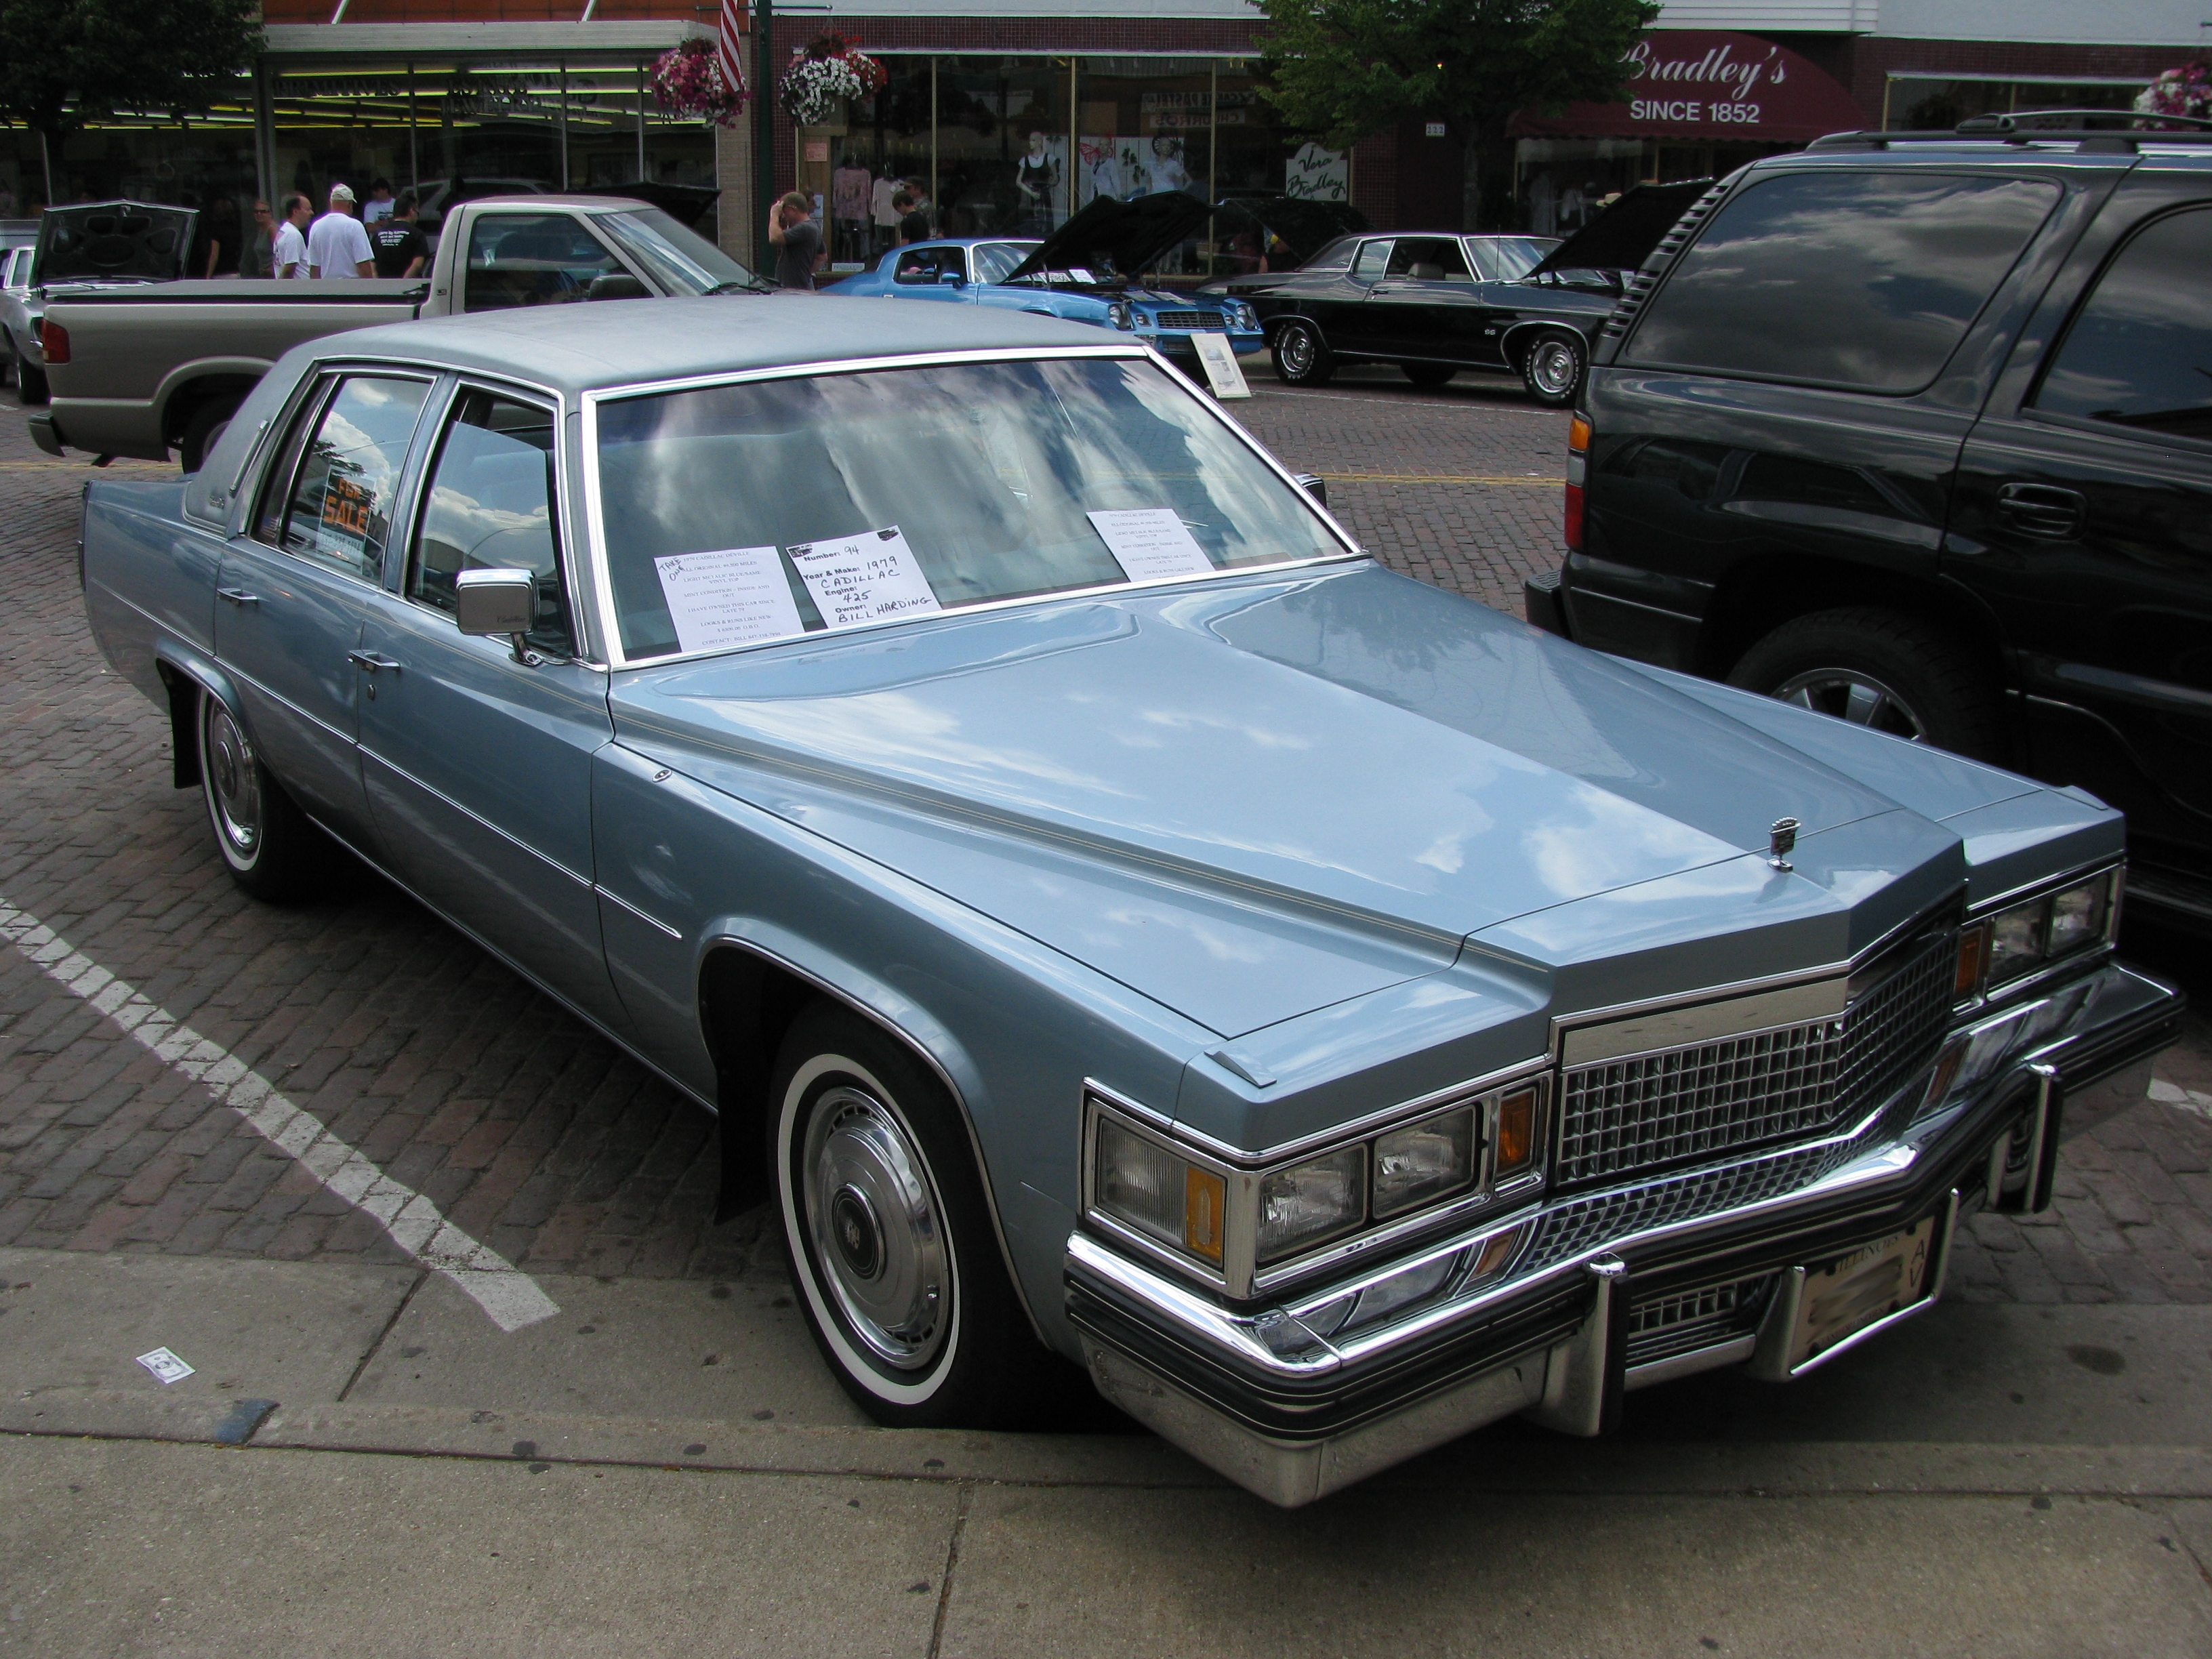 Cadillac Sedan deVille - The Crittenden Automotive Library